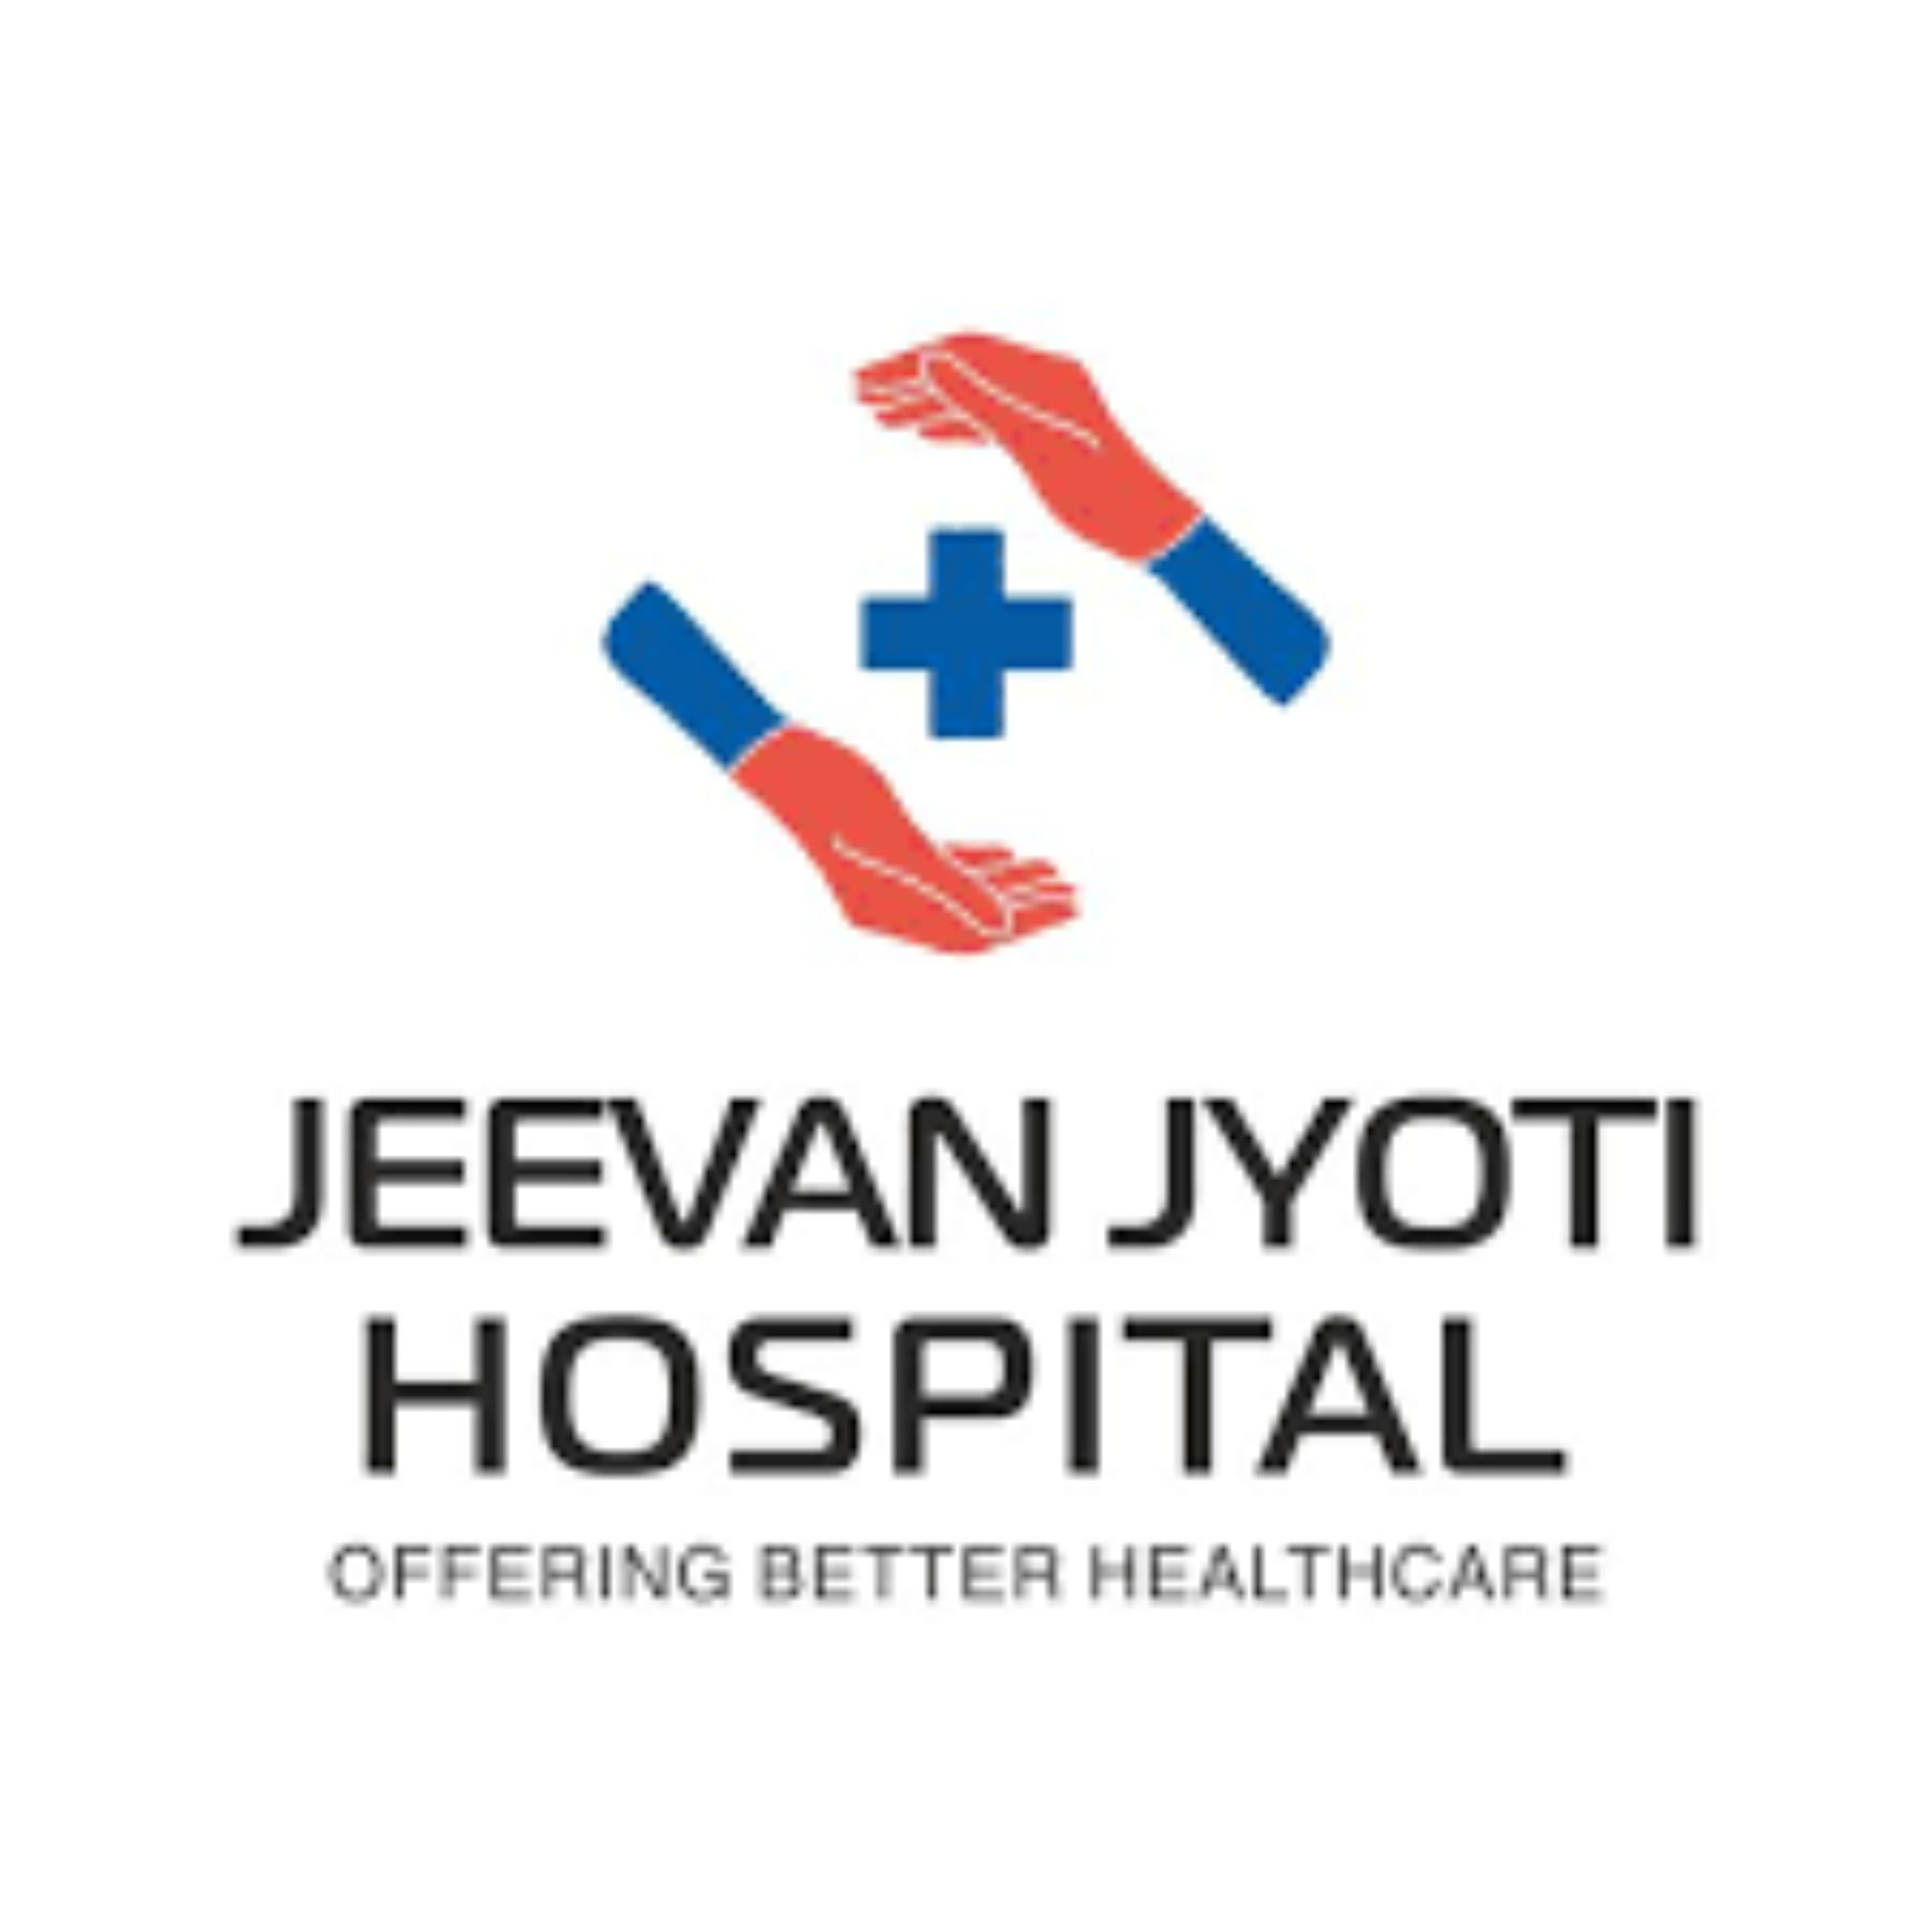 jeevan jyoti hospital logo